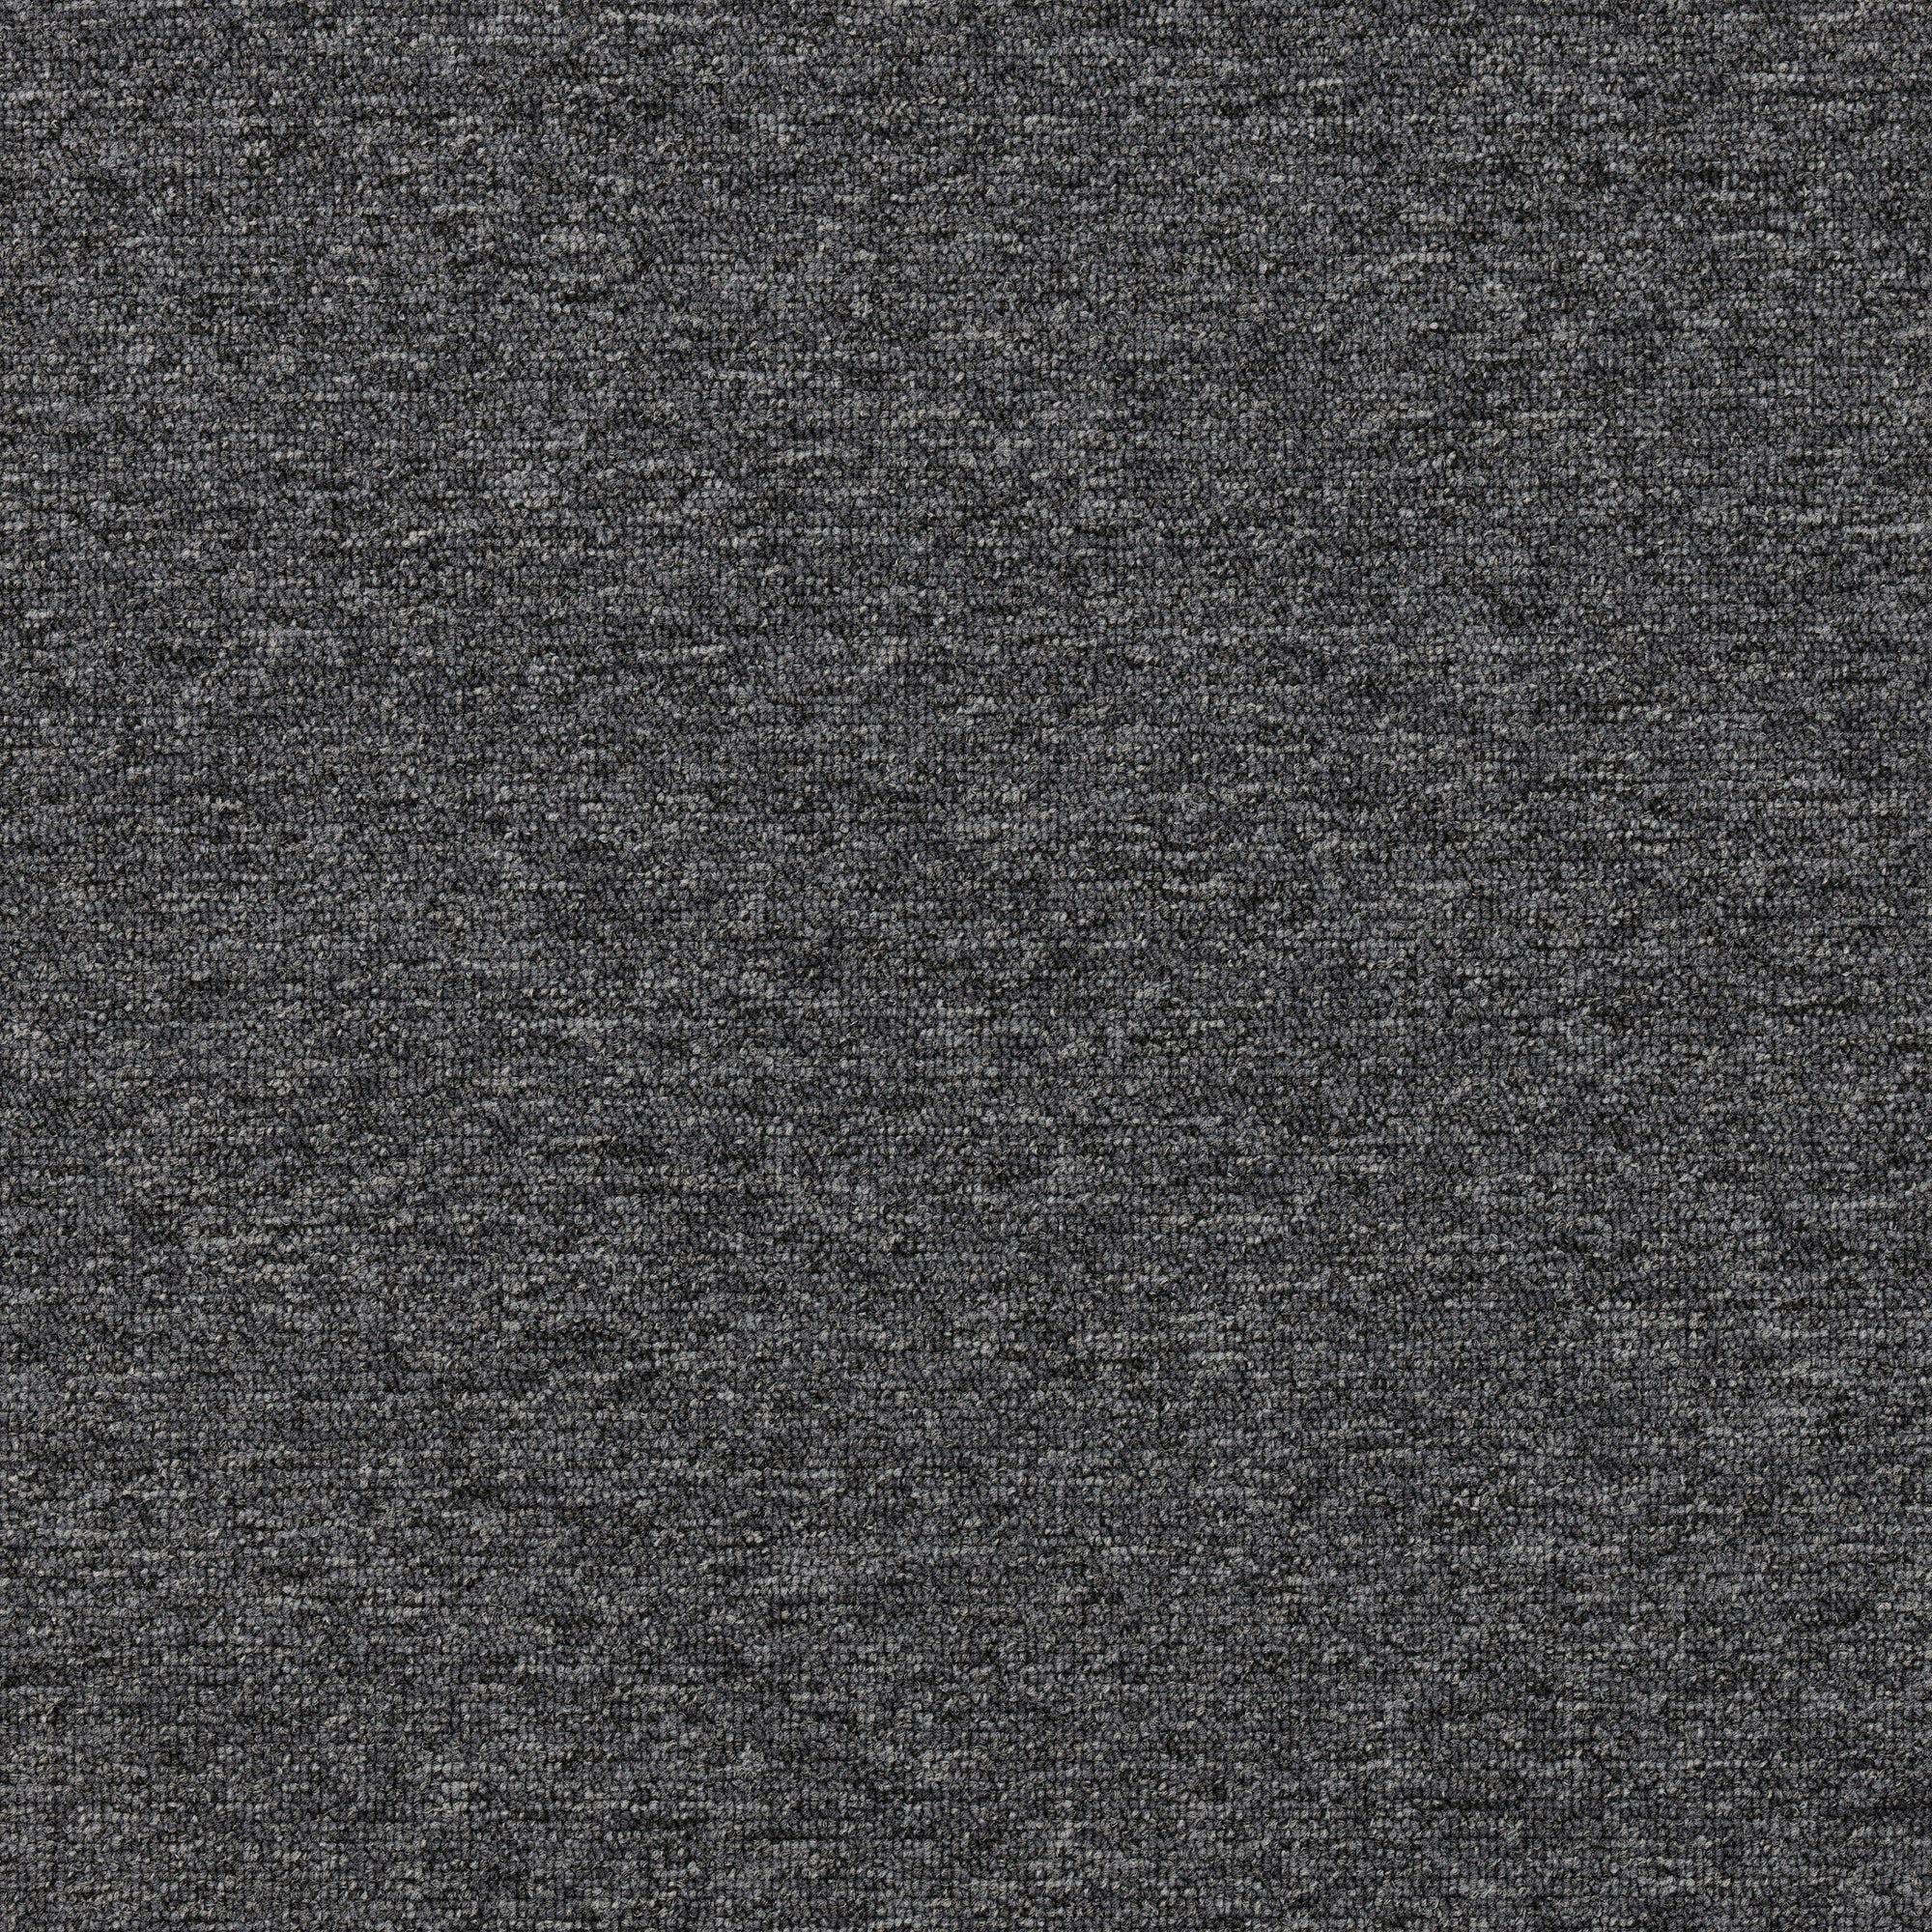 Plusfloor New Viilea Pebble Grey carpet tiles for offices 100% Nylon